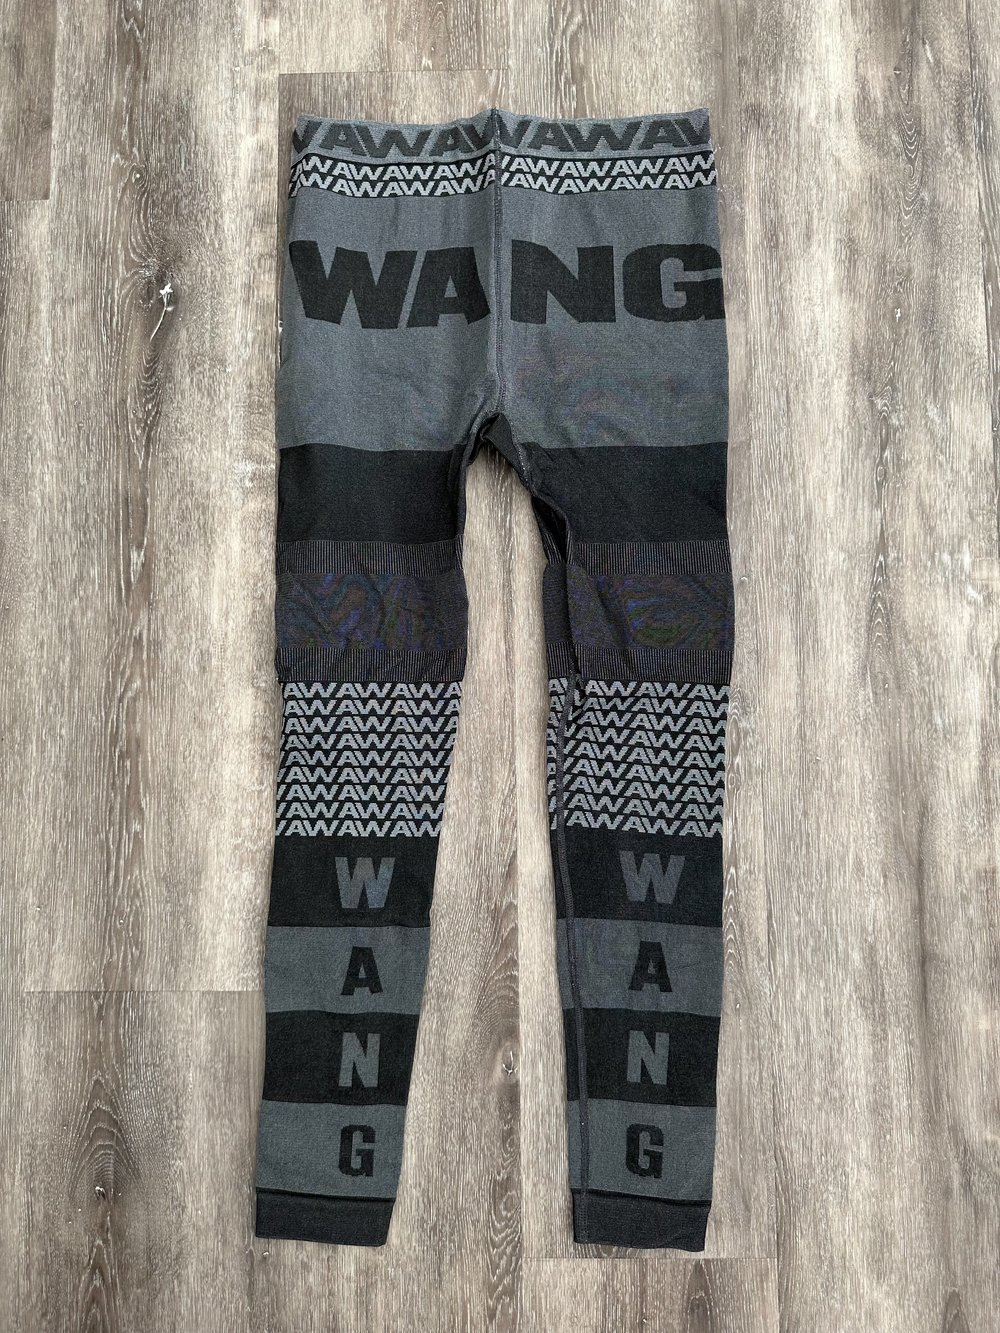 h&m x alexander wang leggings  Urban outfitters flannel, Leggings